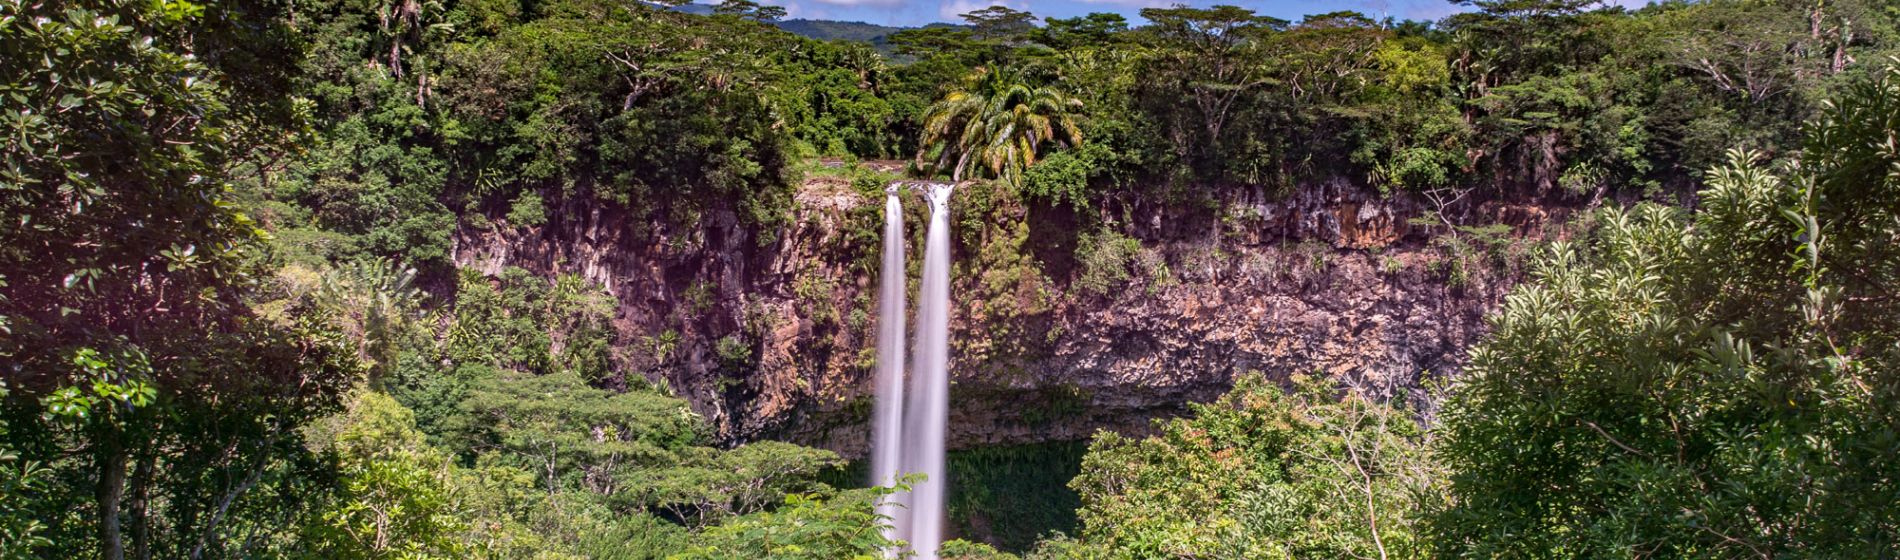 mauritius_waterfall_aaron_clare.jpg